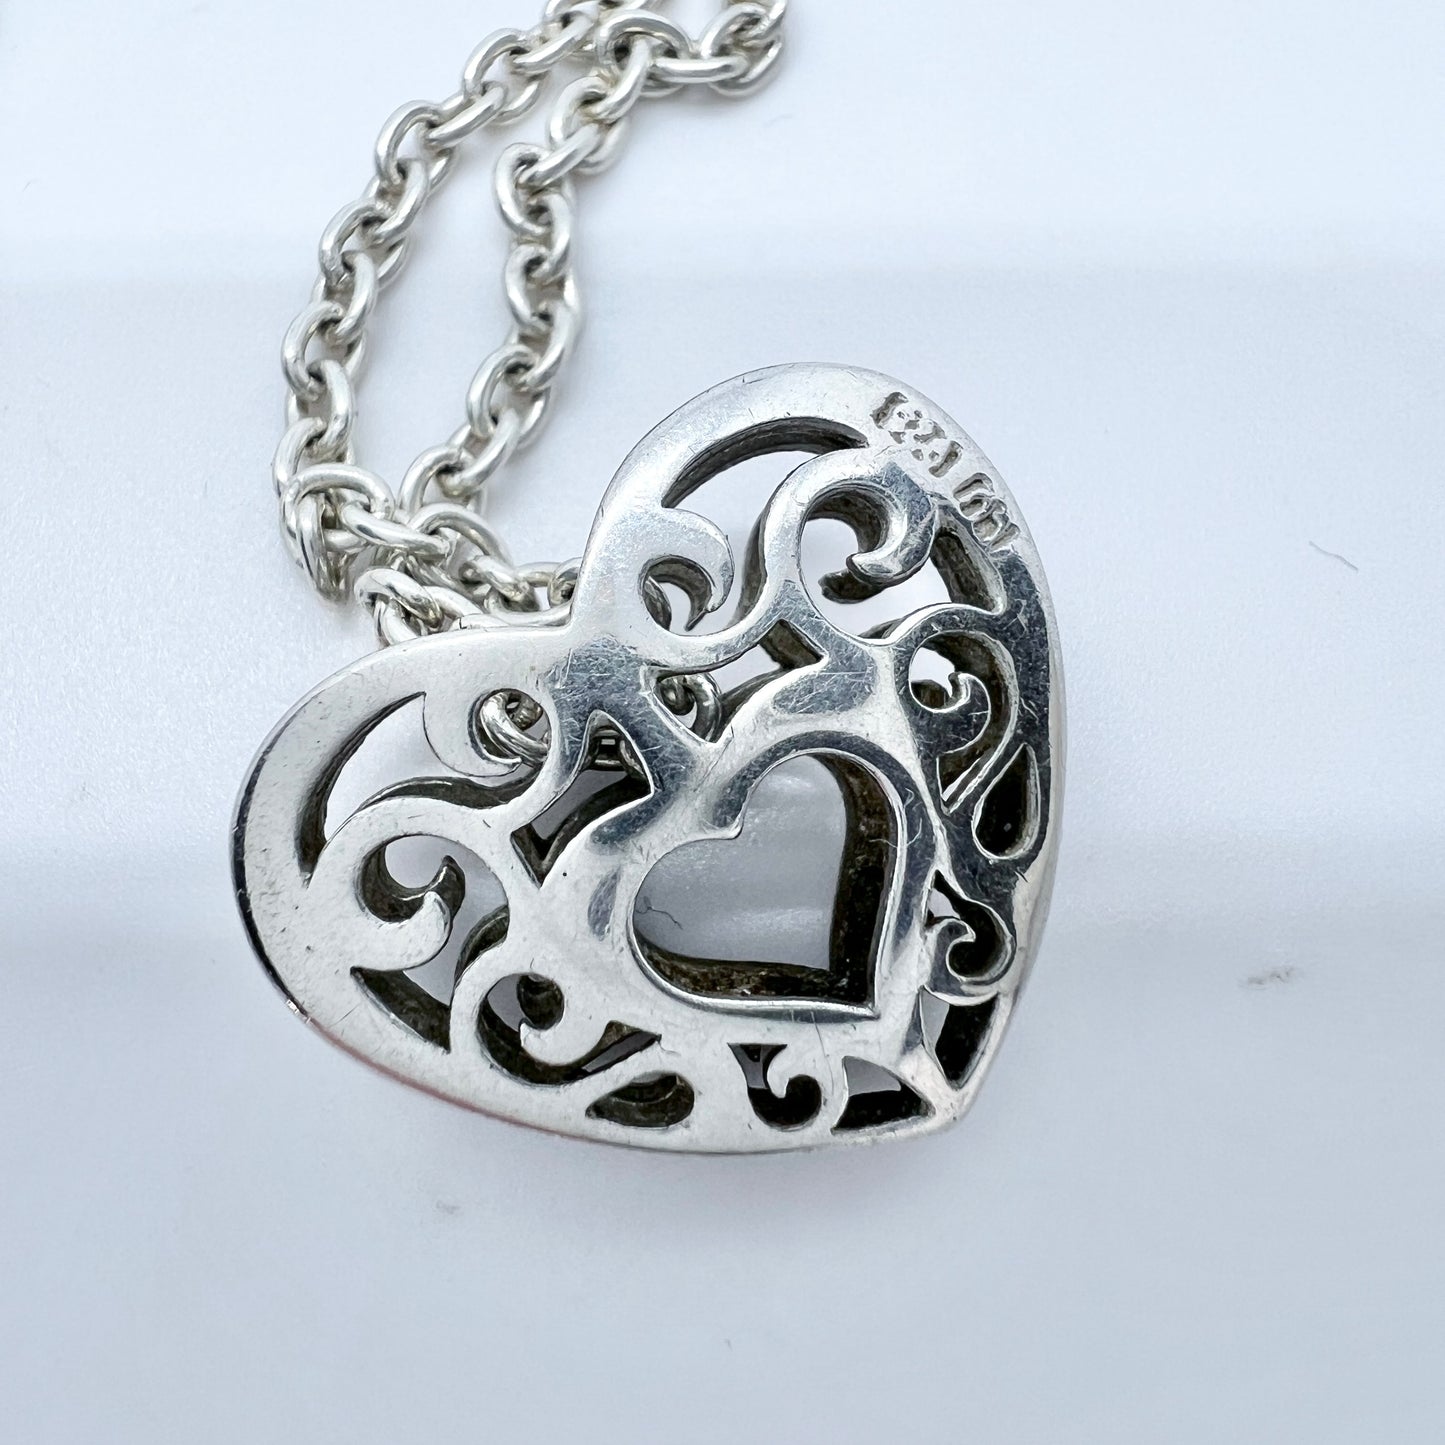 Finland. Vintage Sterling Silver Heart Pendant Necklace.